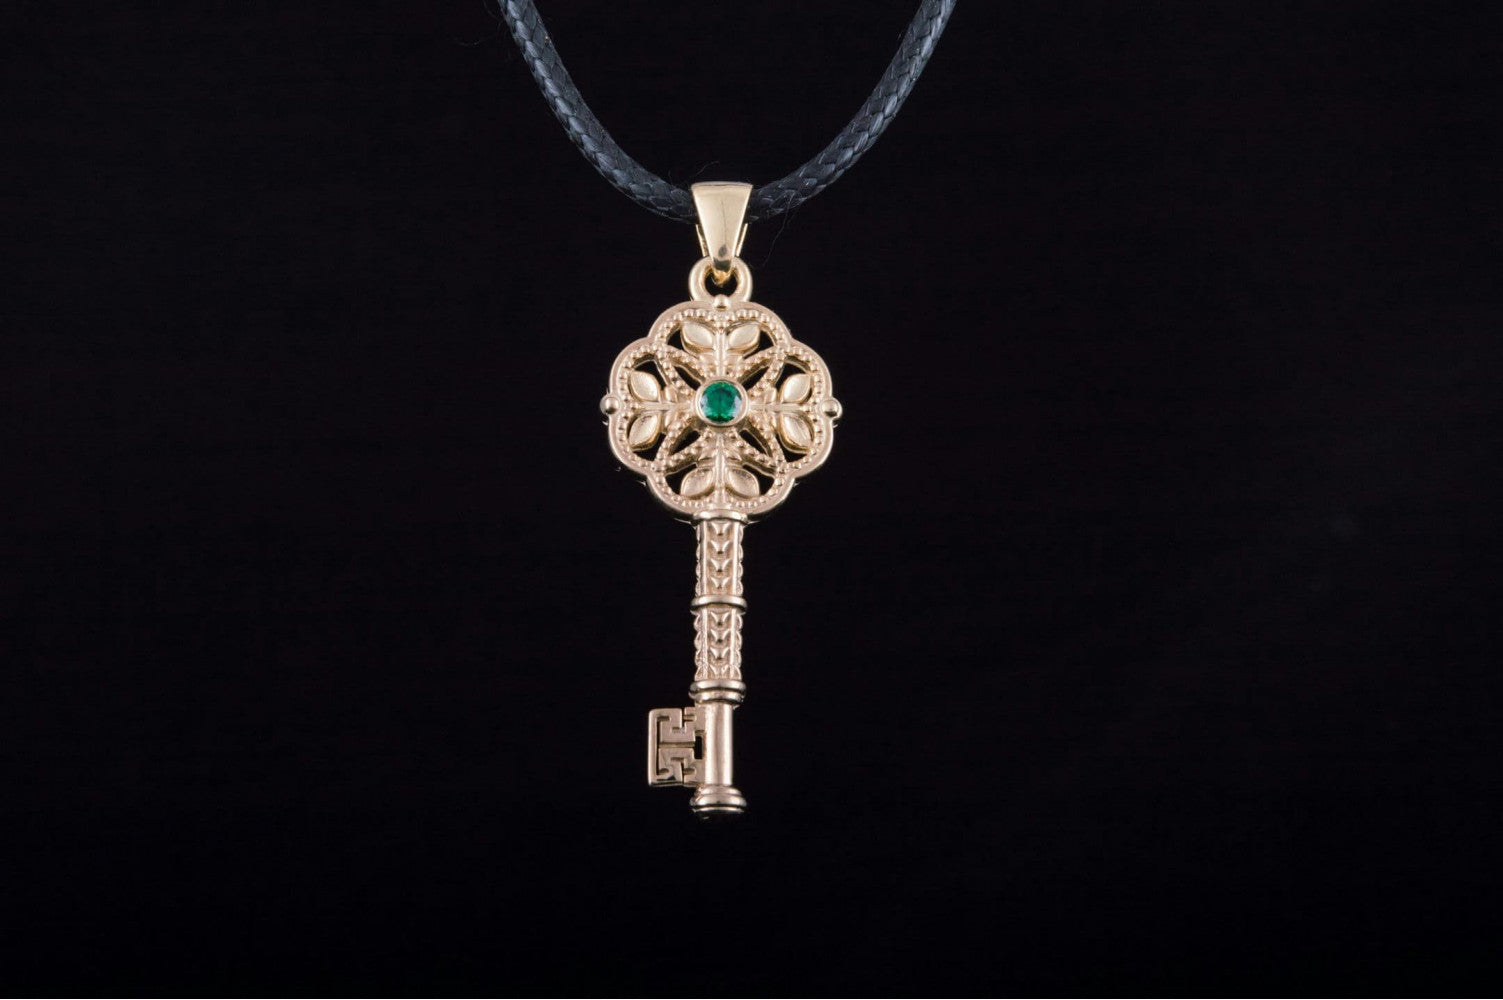 14K Gold Fashion Key Pendant with Cubic Zirconia Jewelry